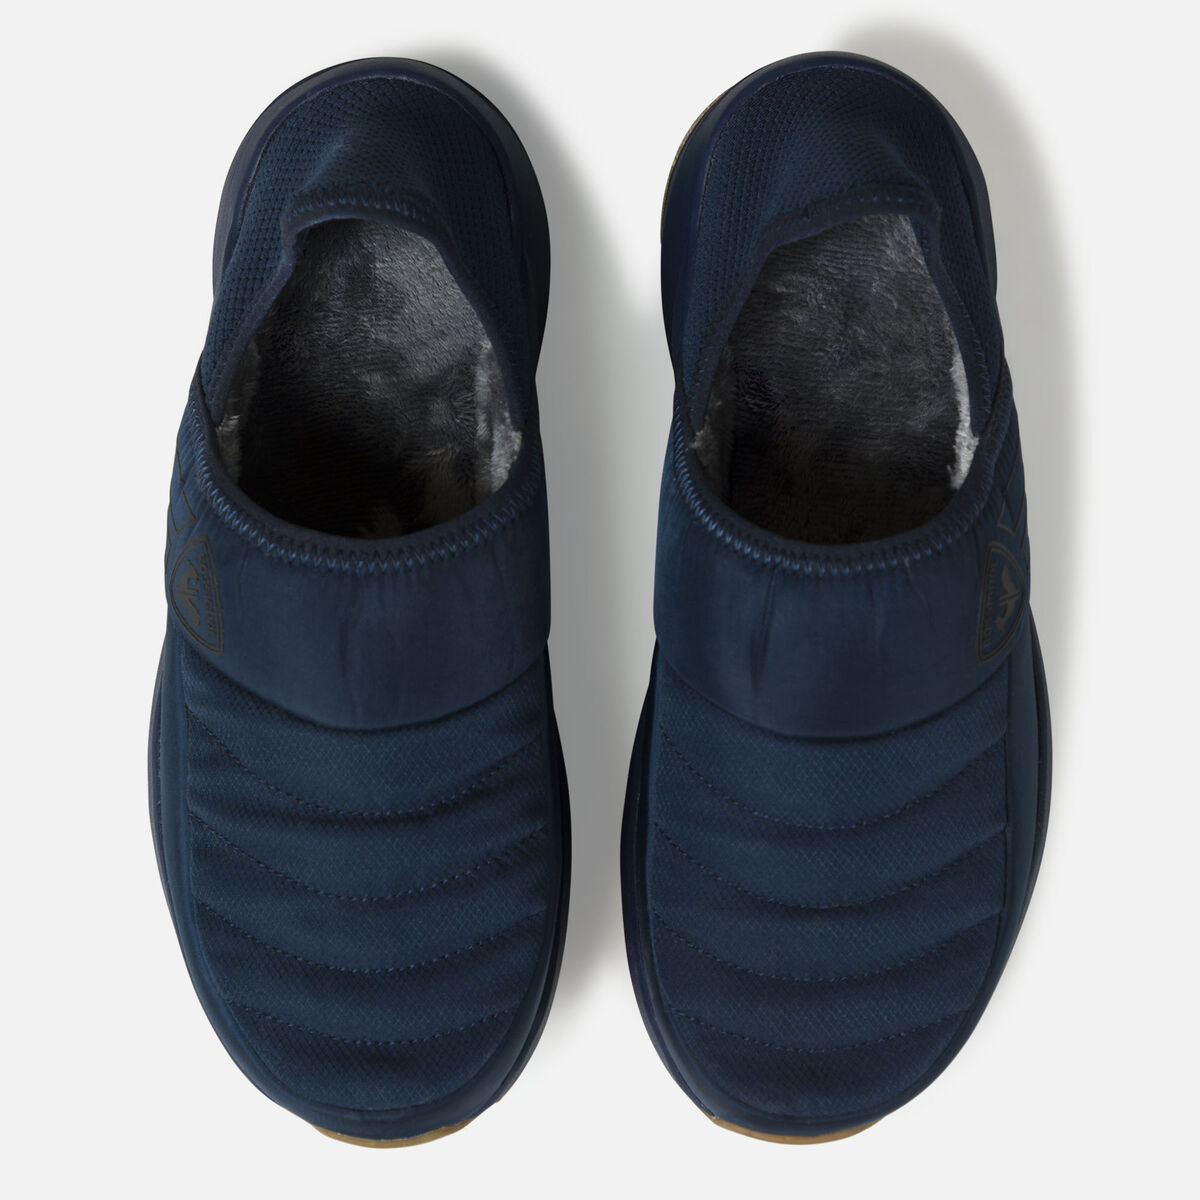 Rossignol Men's Chalet Navy shoes blue